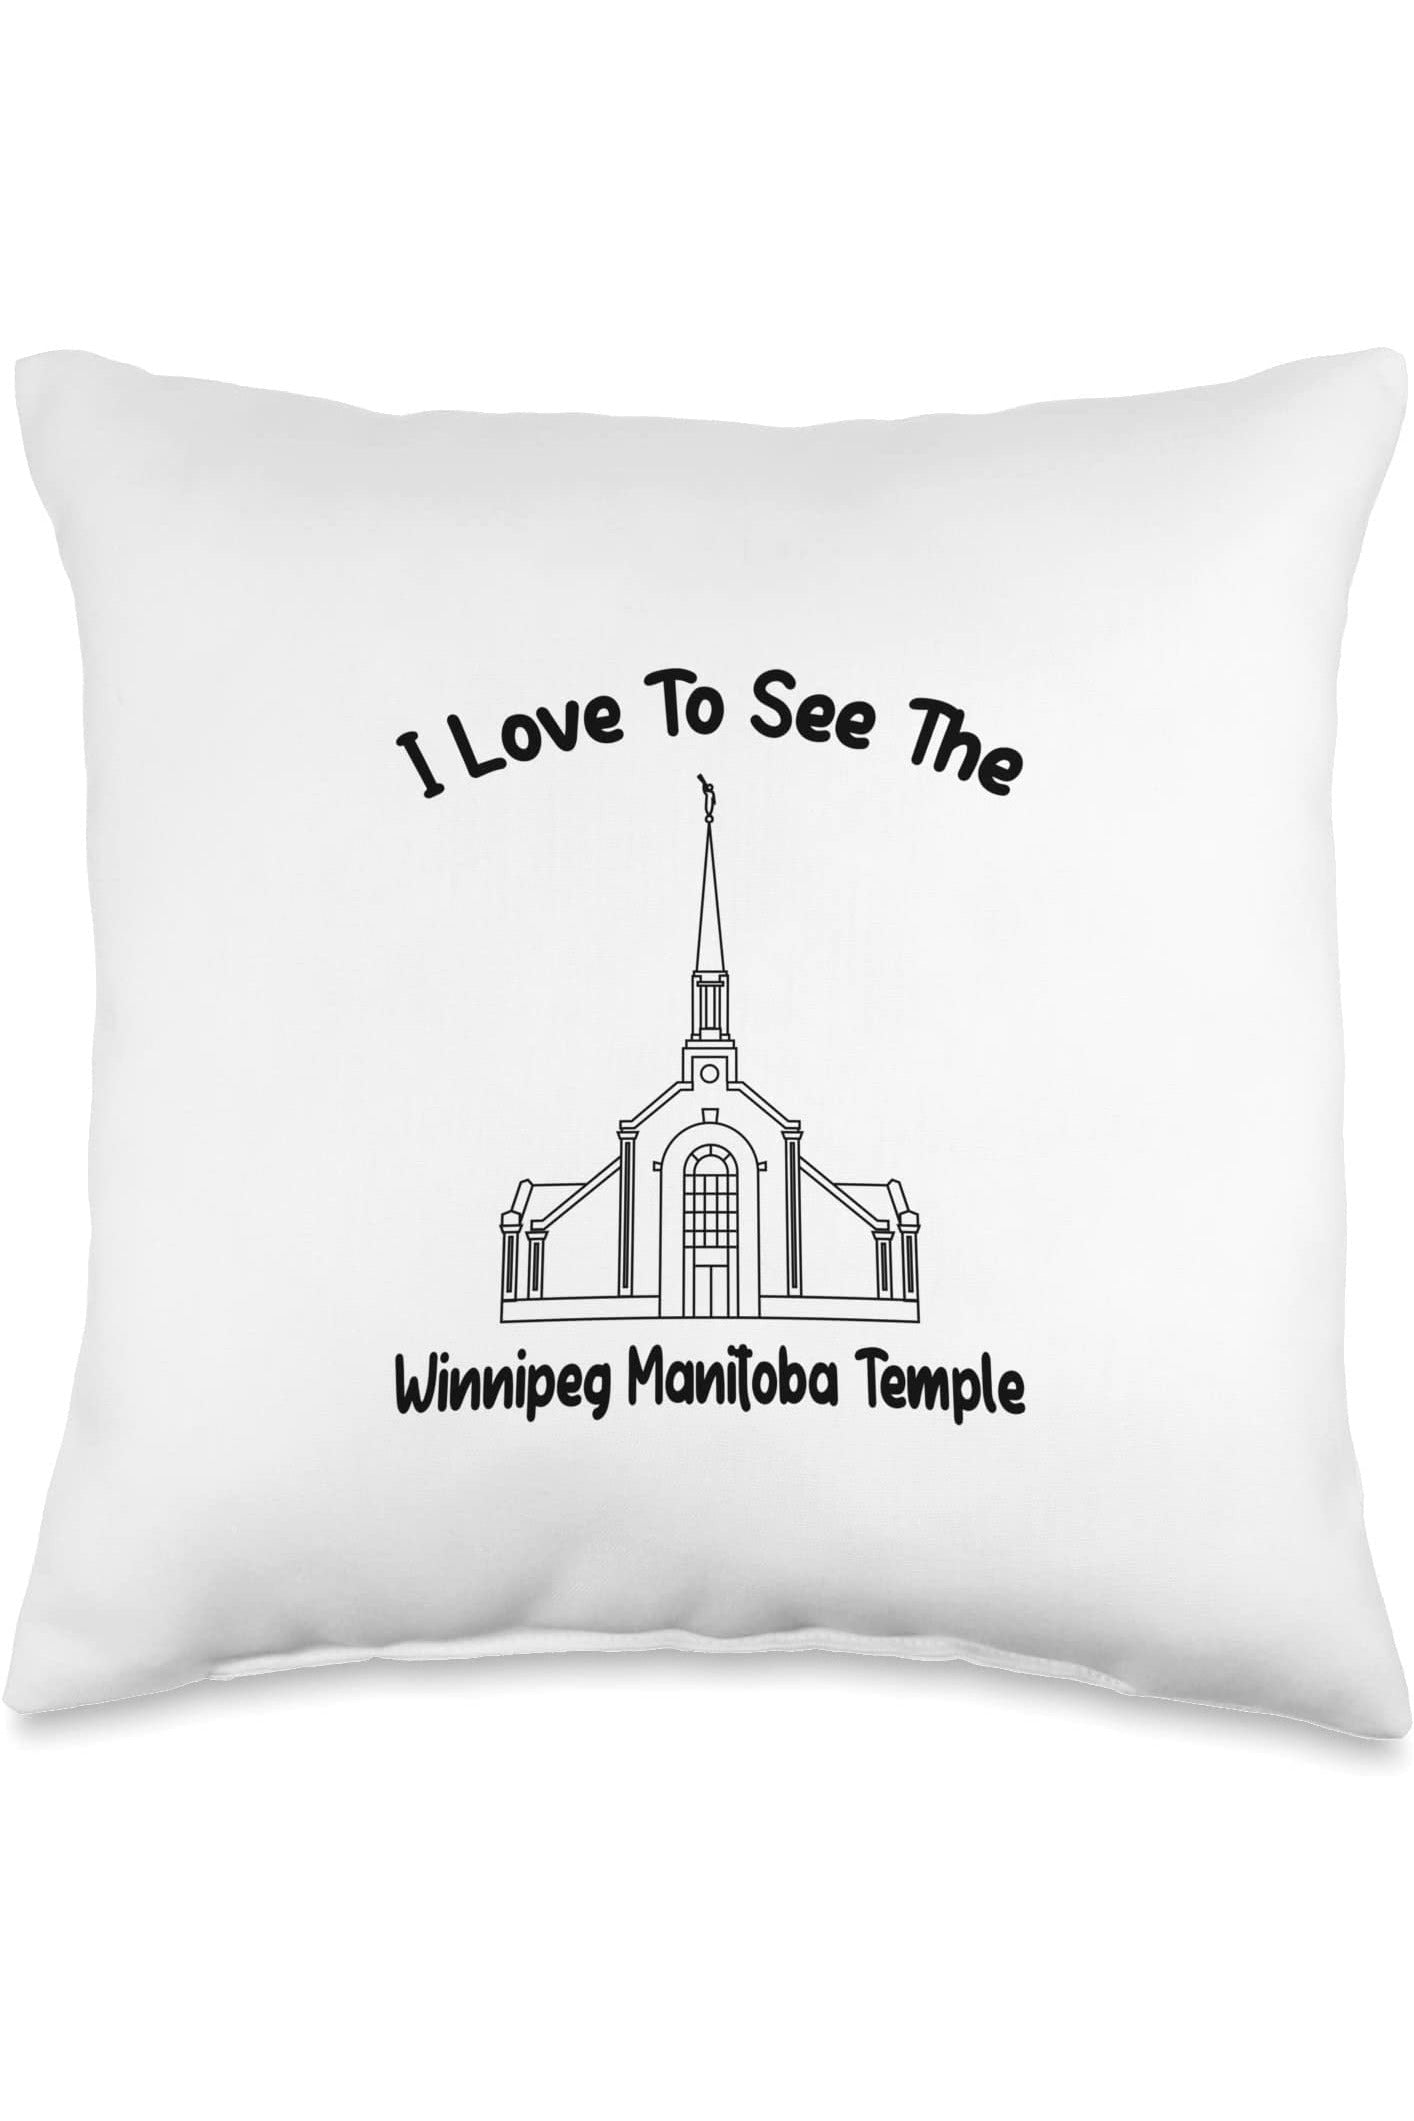 Winnipeg Manitoba Temple Throw Pillows - Primary Style (English) US